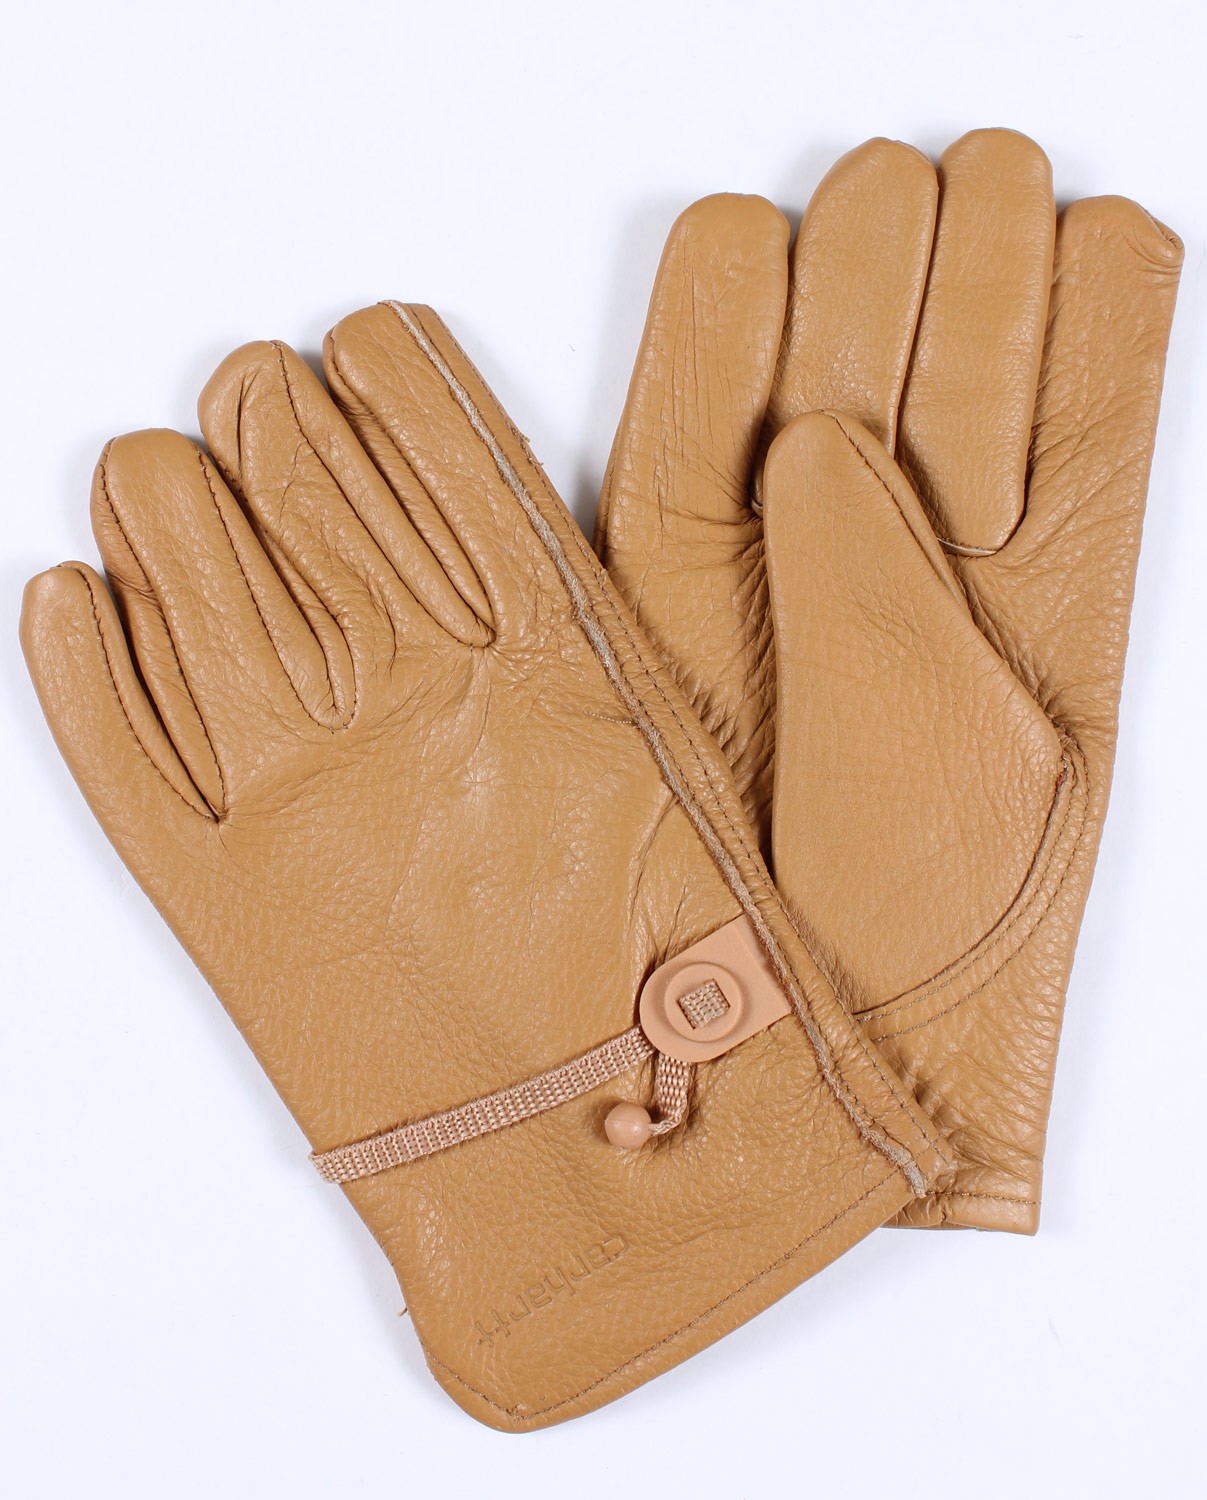 https://www.fortbrands.com/5322/carhartt-leather-driver-gloves.jpg